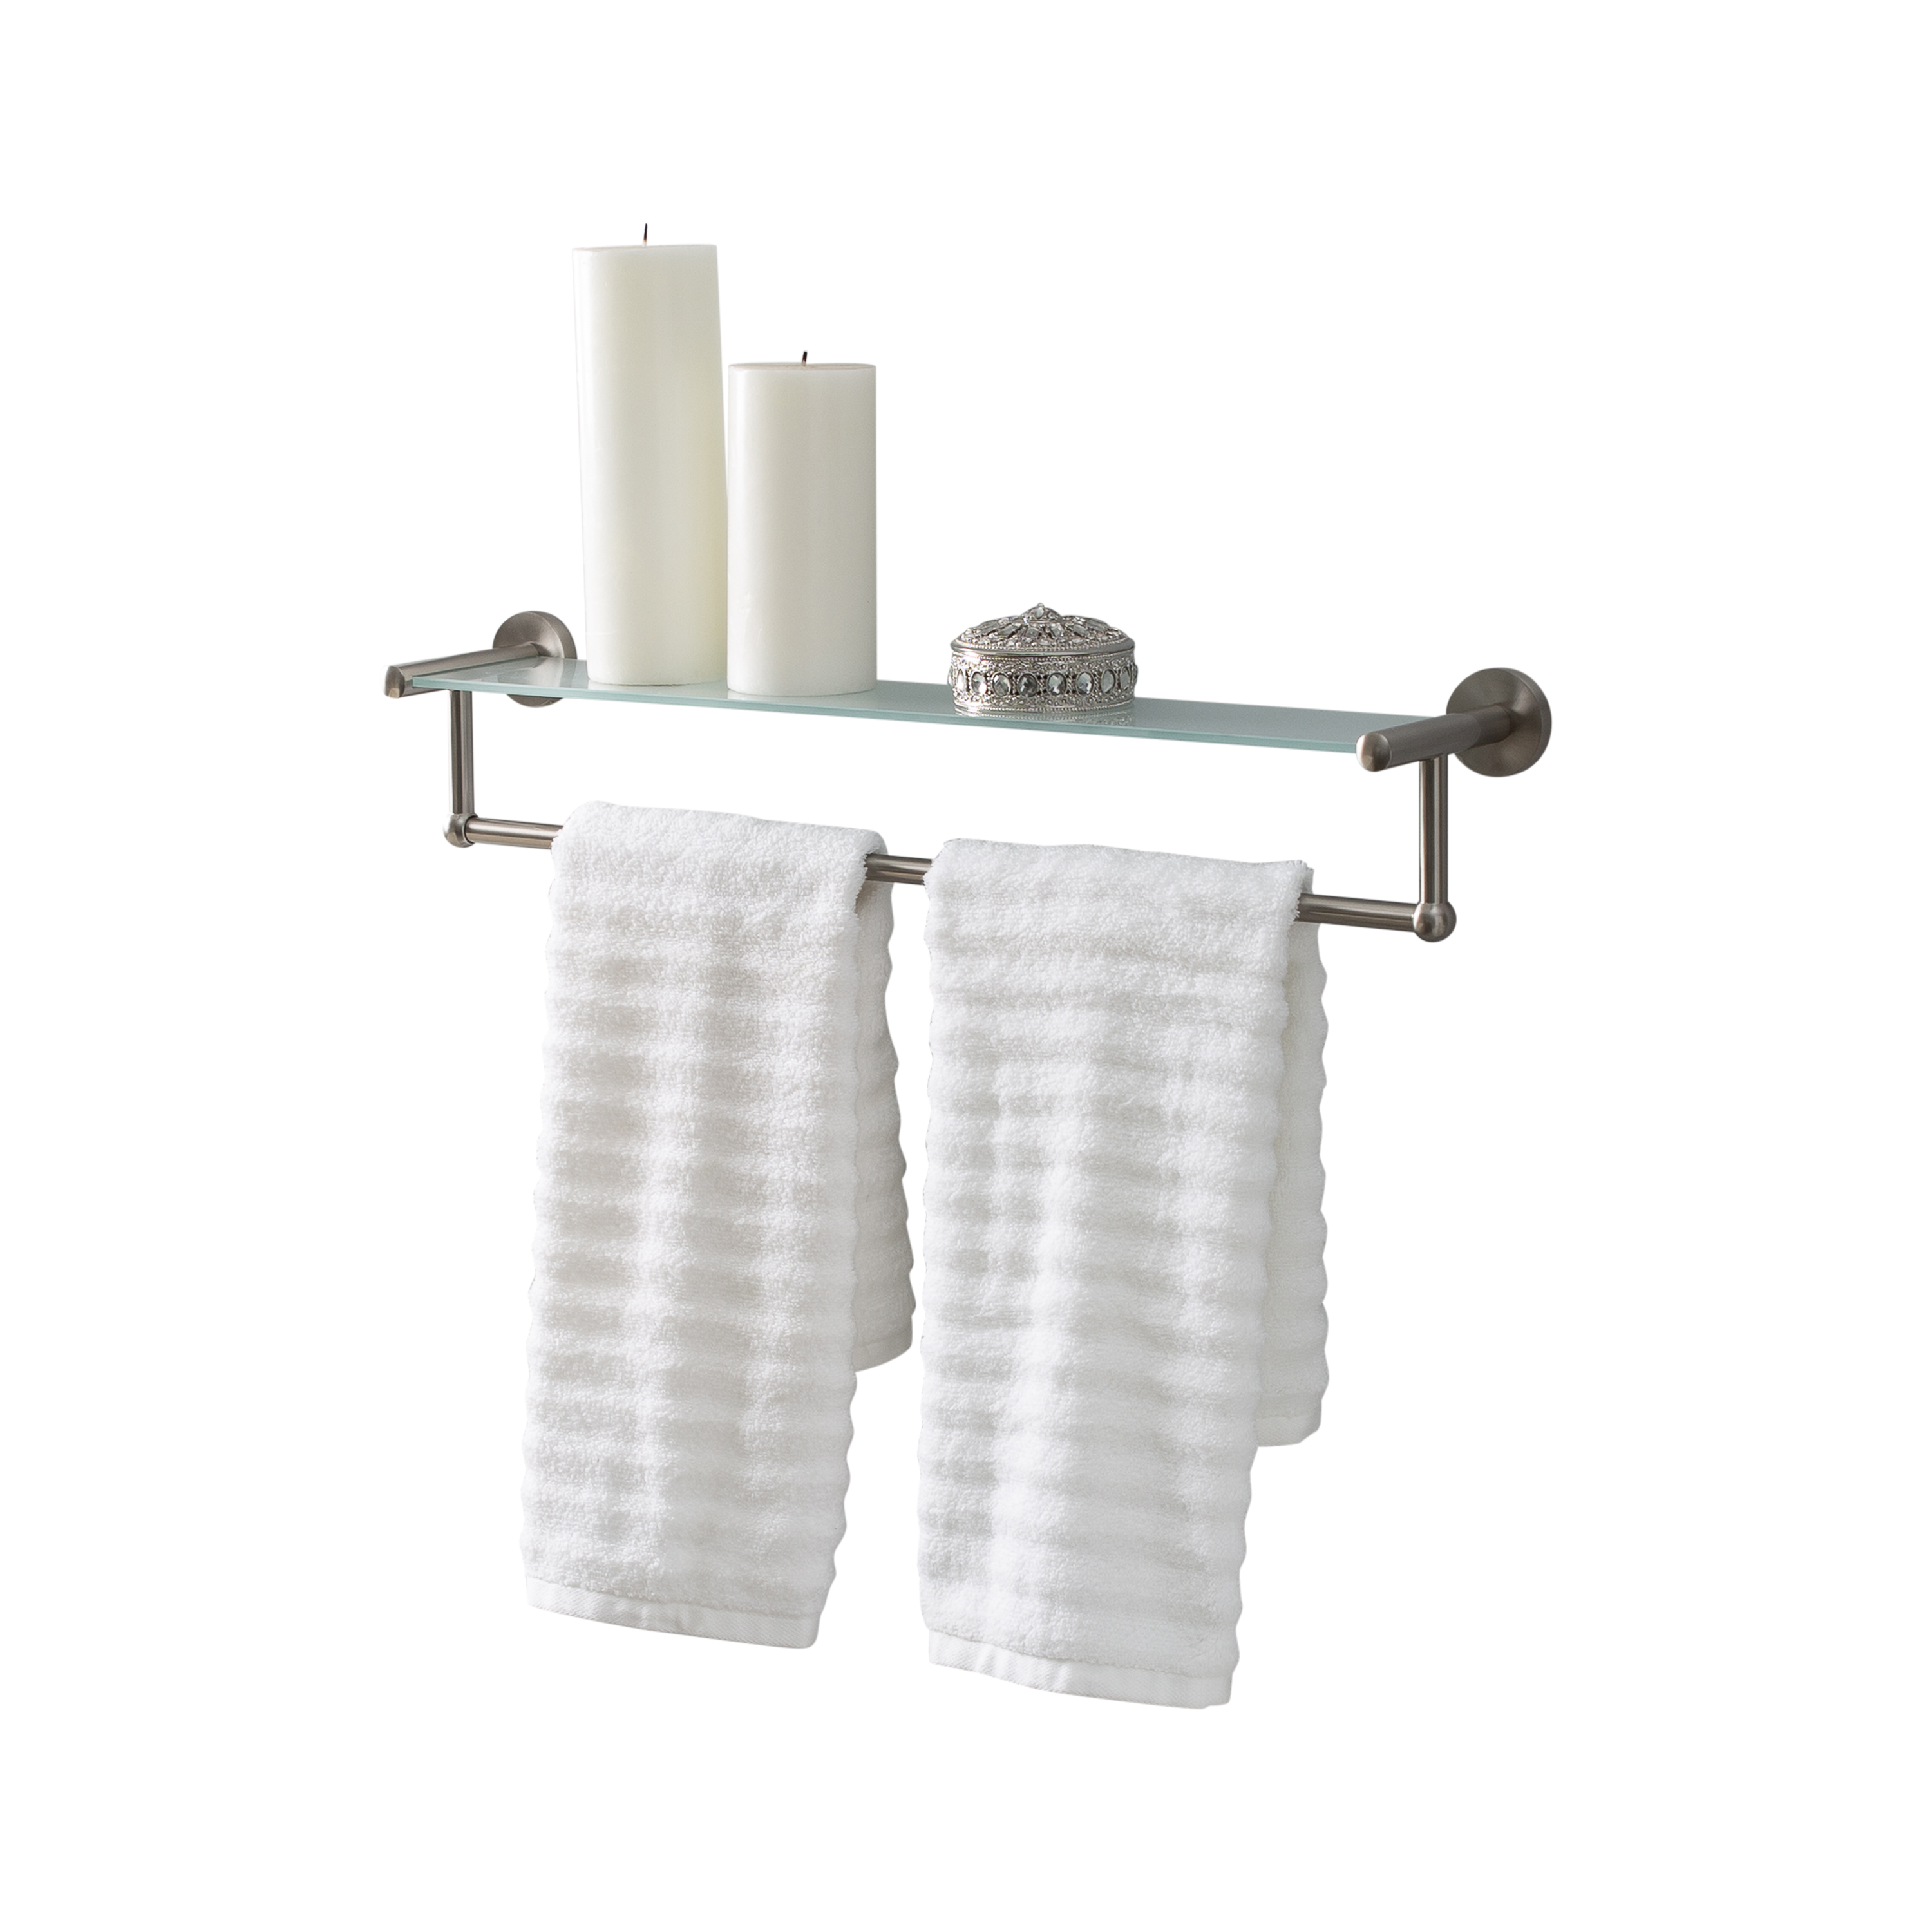 Organize It All Satin Nickel Glass Bathroom Shelf with Towel Bar - image 5 of 8